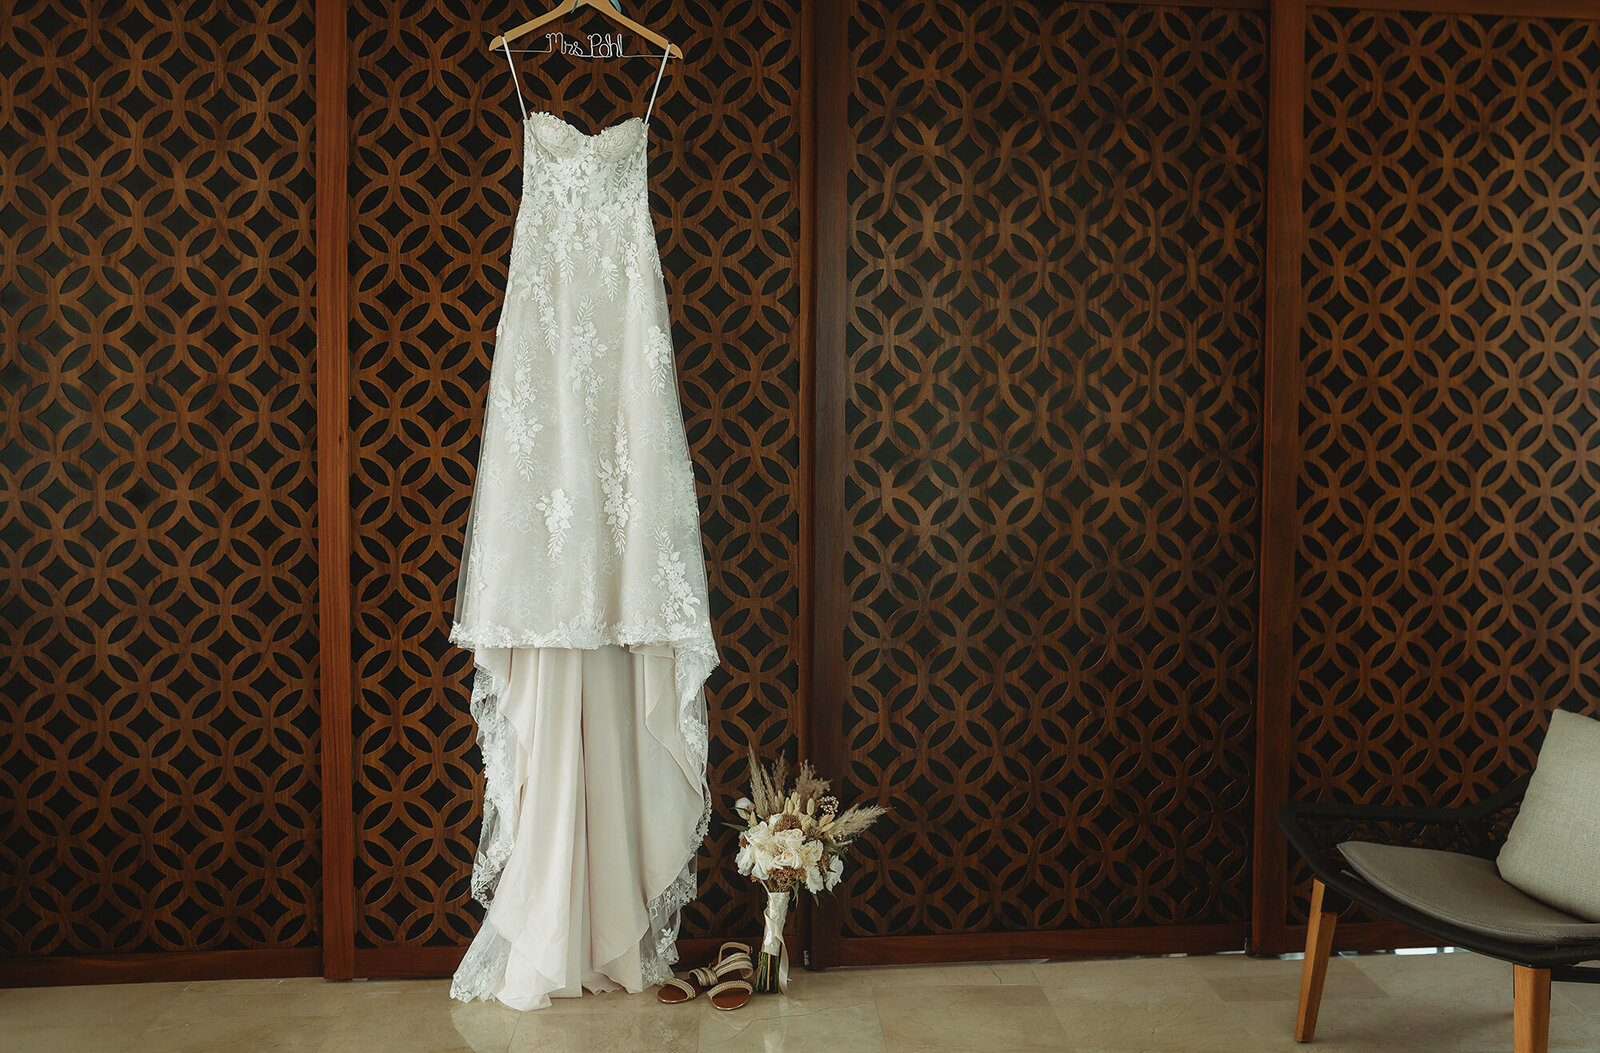 Wedding Dress detail shot.